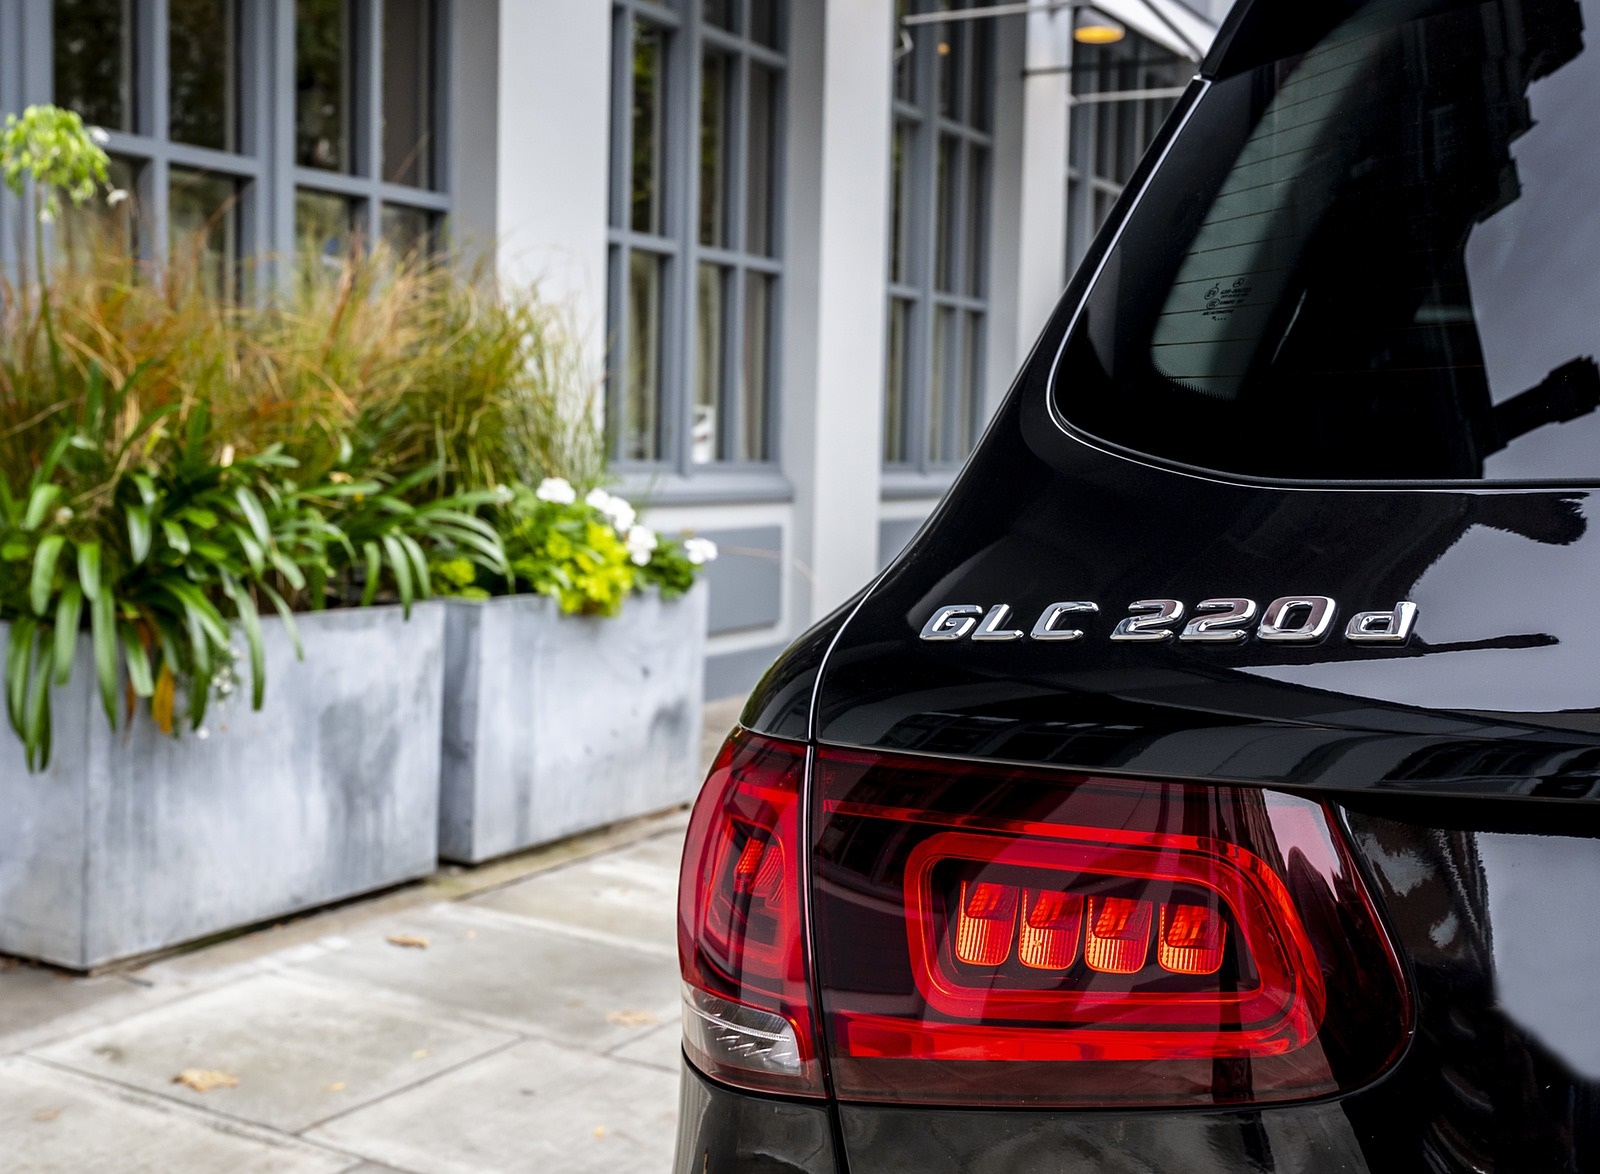 2020 Mercedes-Benz GLC 220d (UK-Spec) Tail Light Wallpapers #61 of 88